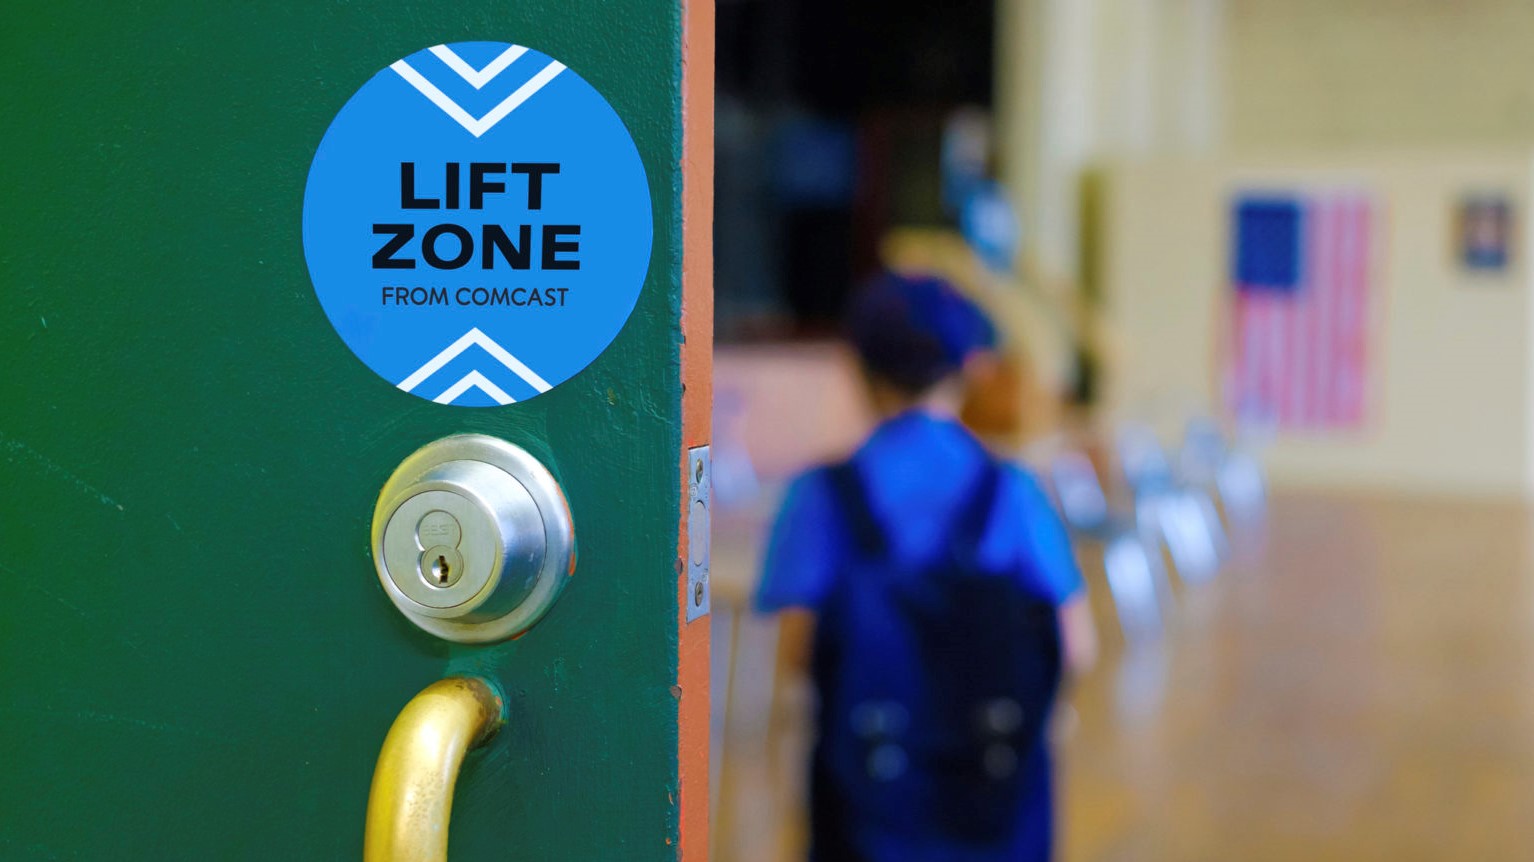 A Lift Zone sticker on a community center door